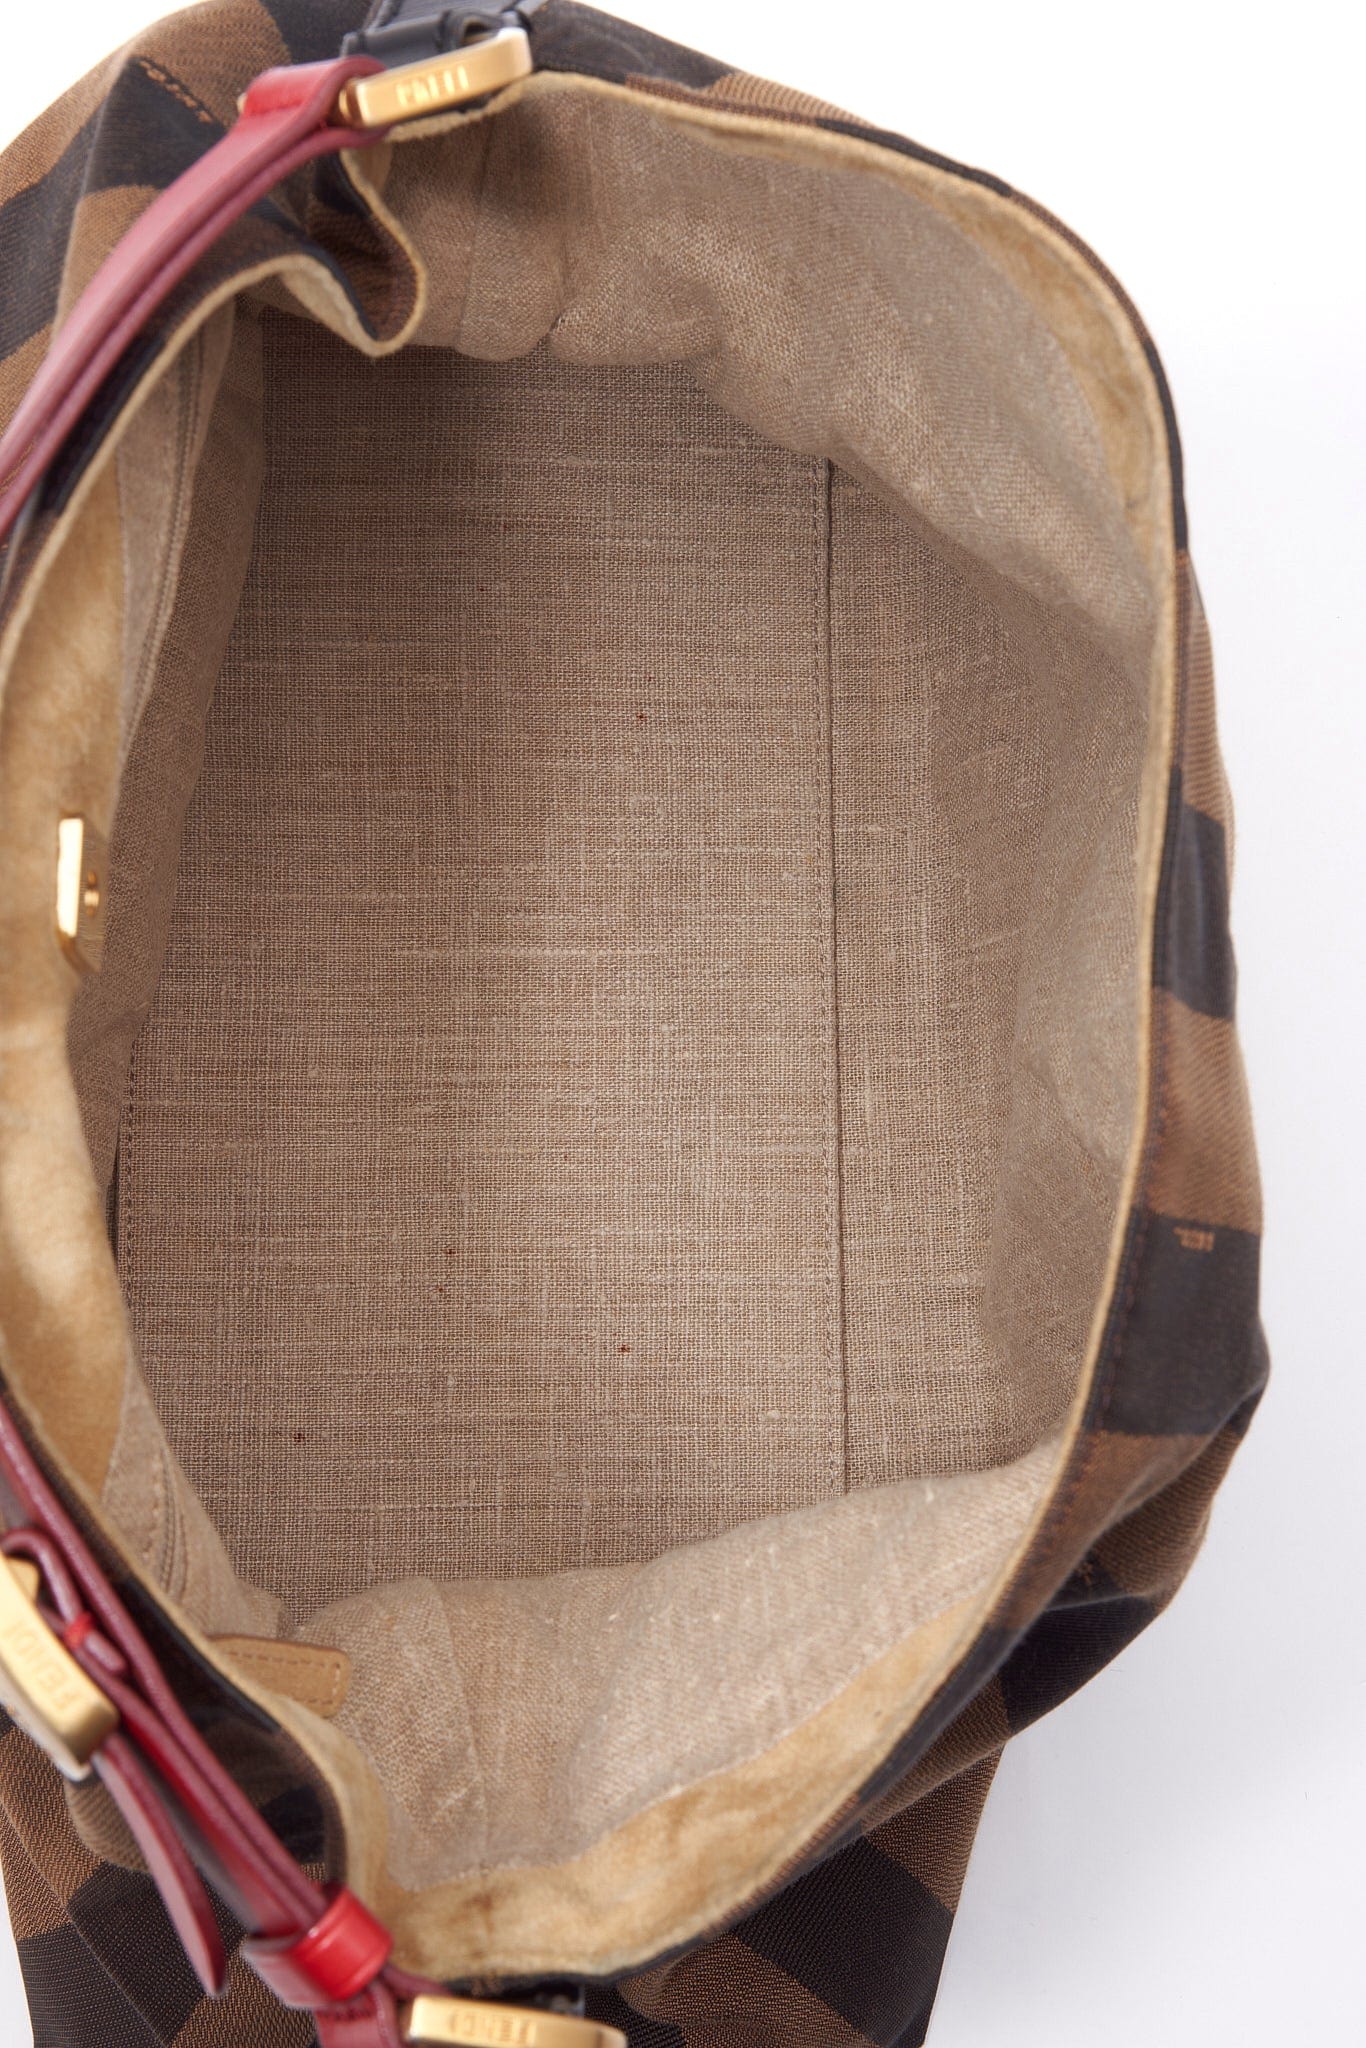 Fendi Vintage Striped Tote Bag